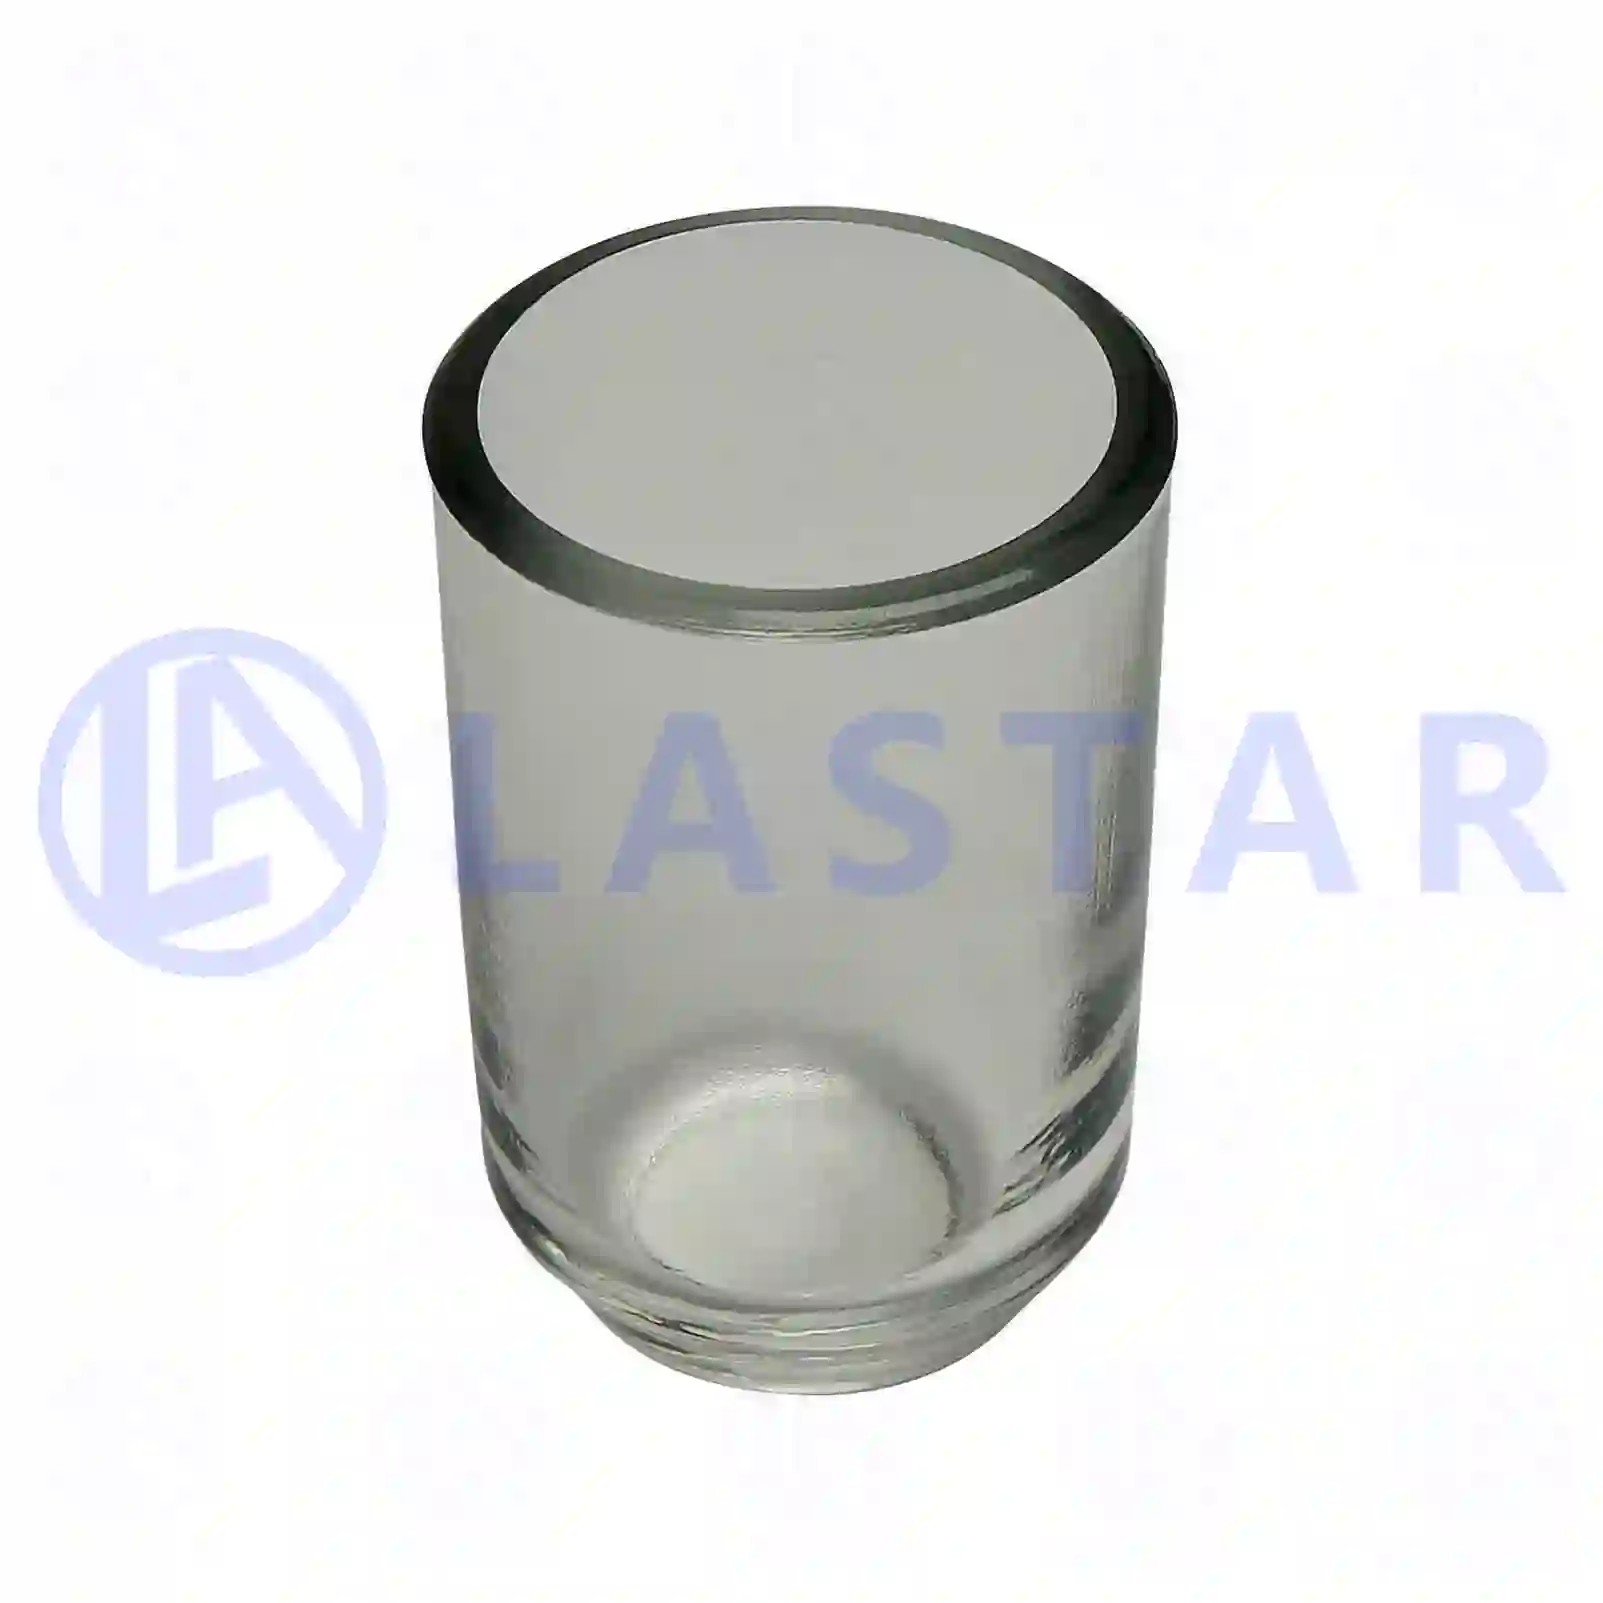  Inspection glass || Lastar Spare Part | Truck Spare Parts, Auotomotive Spare Parts